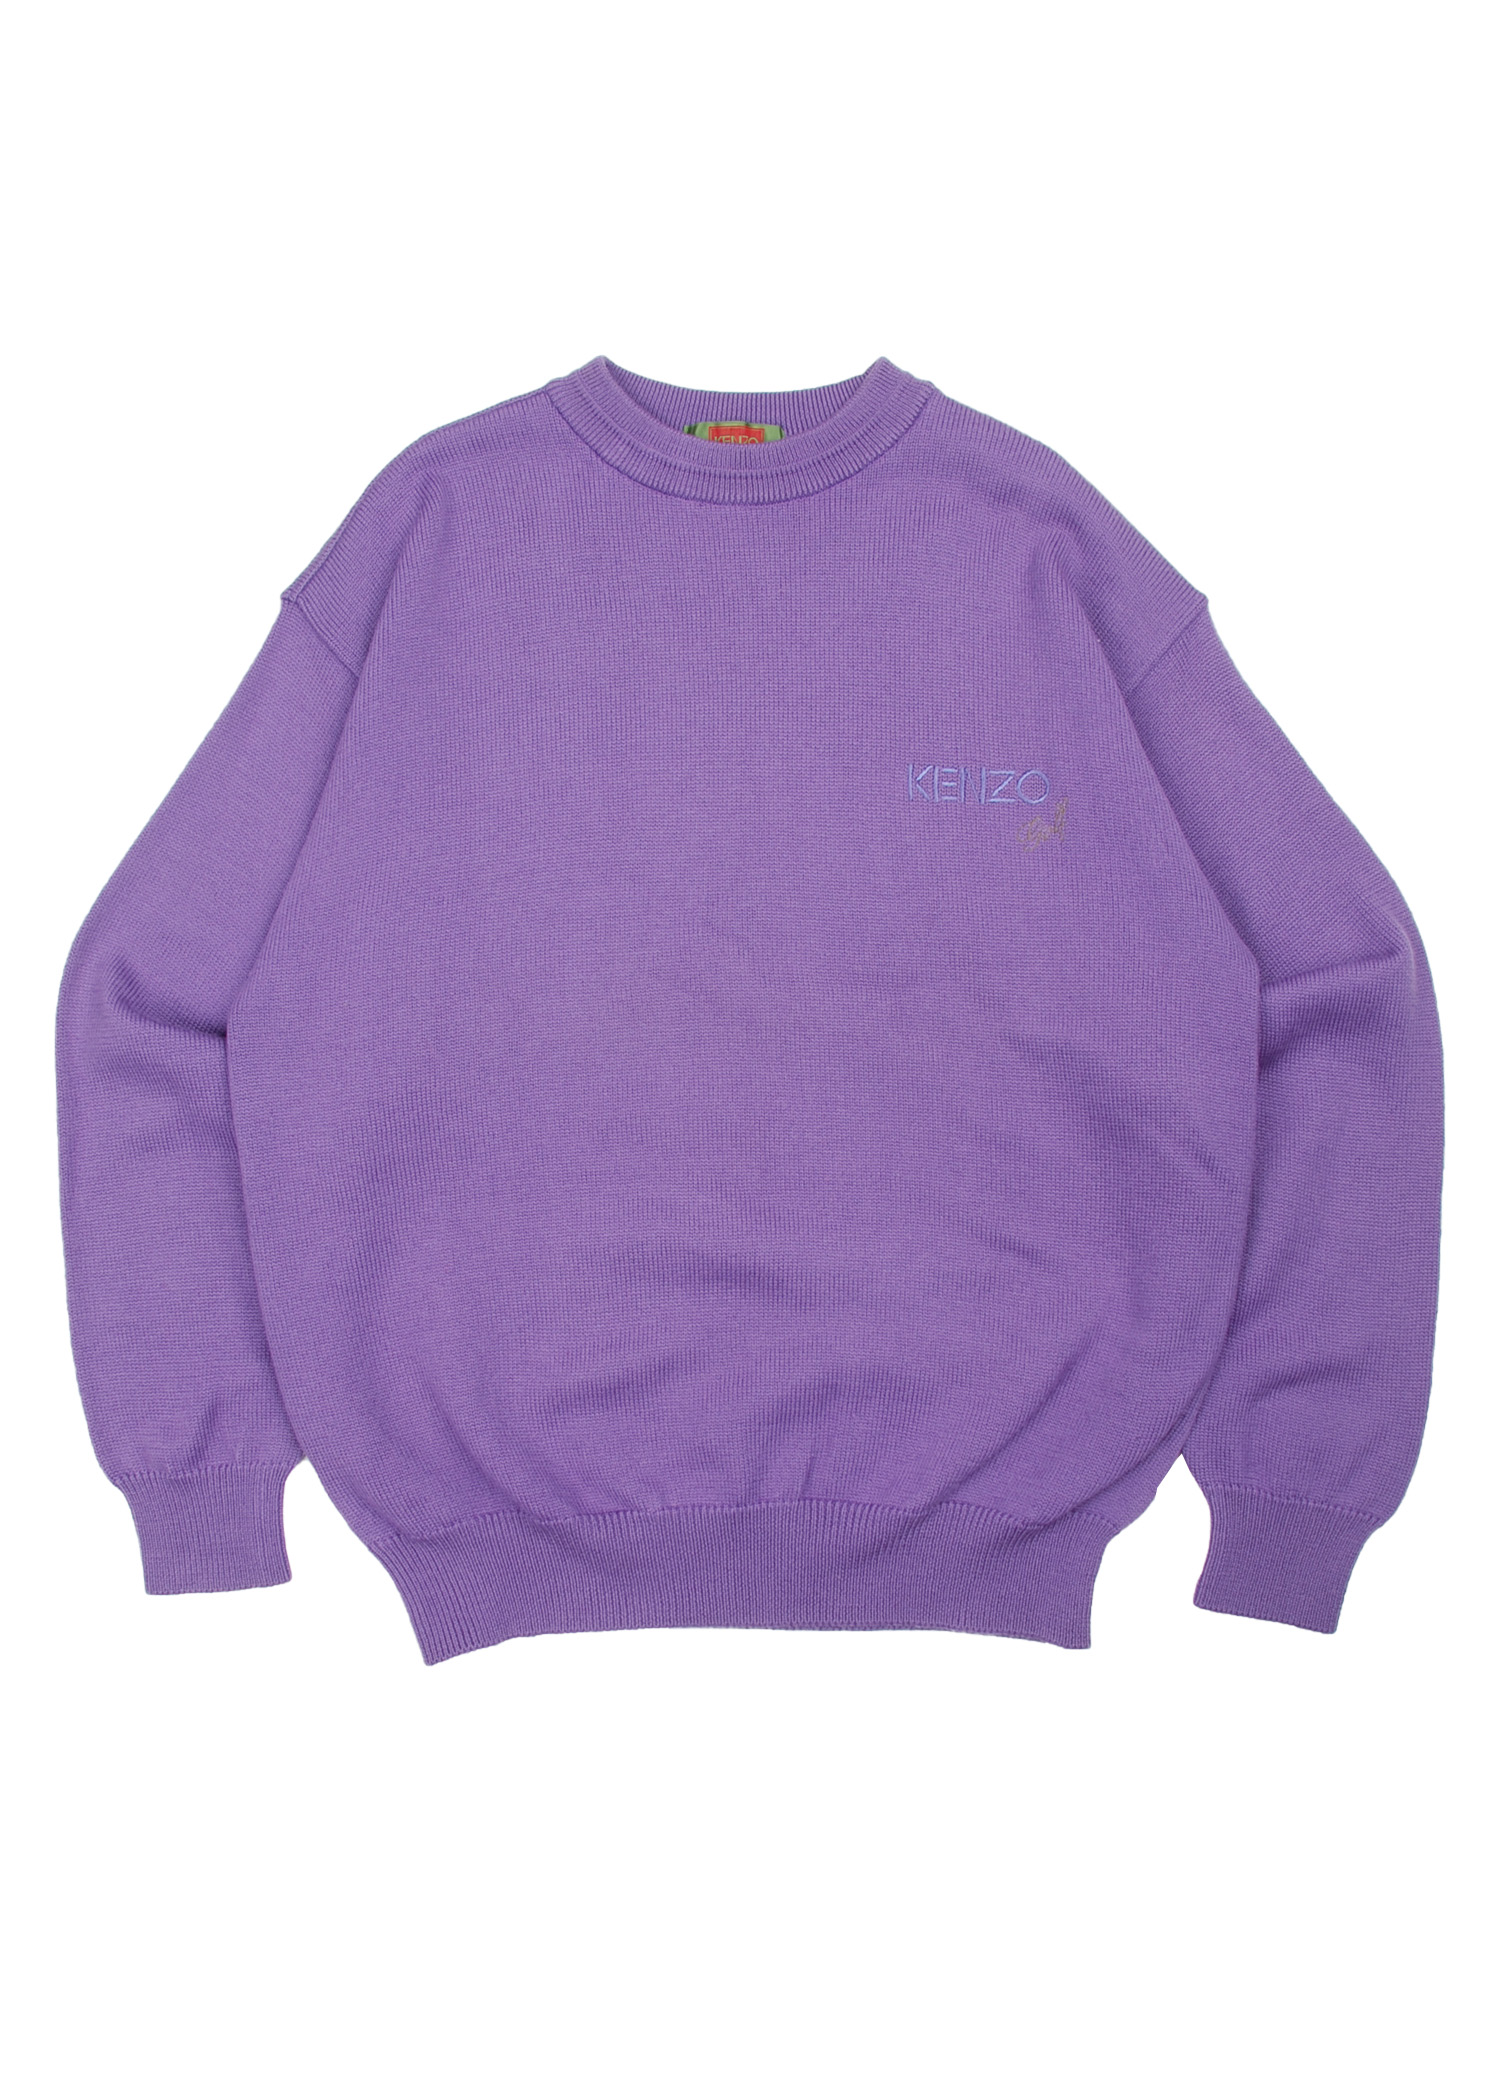 KENZO purple logo knit